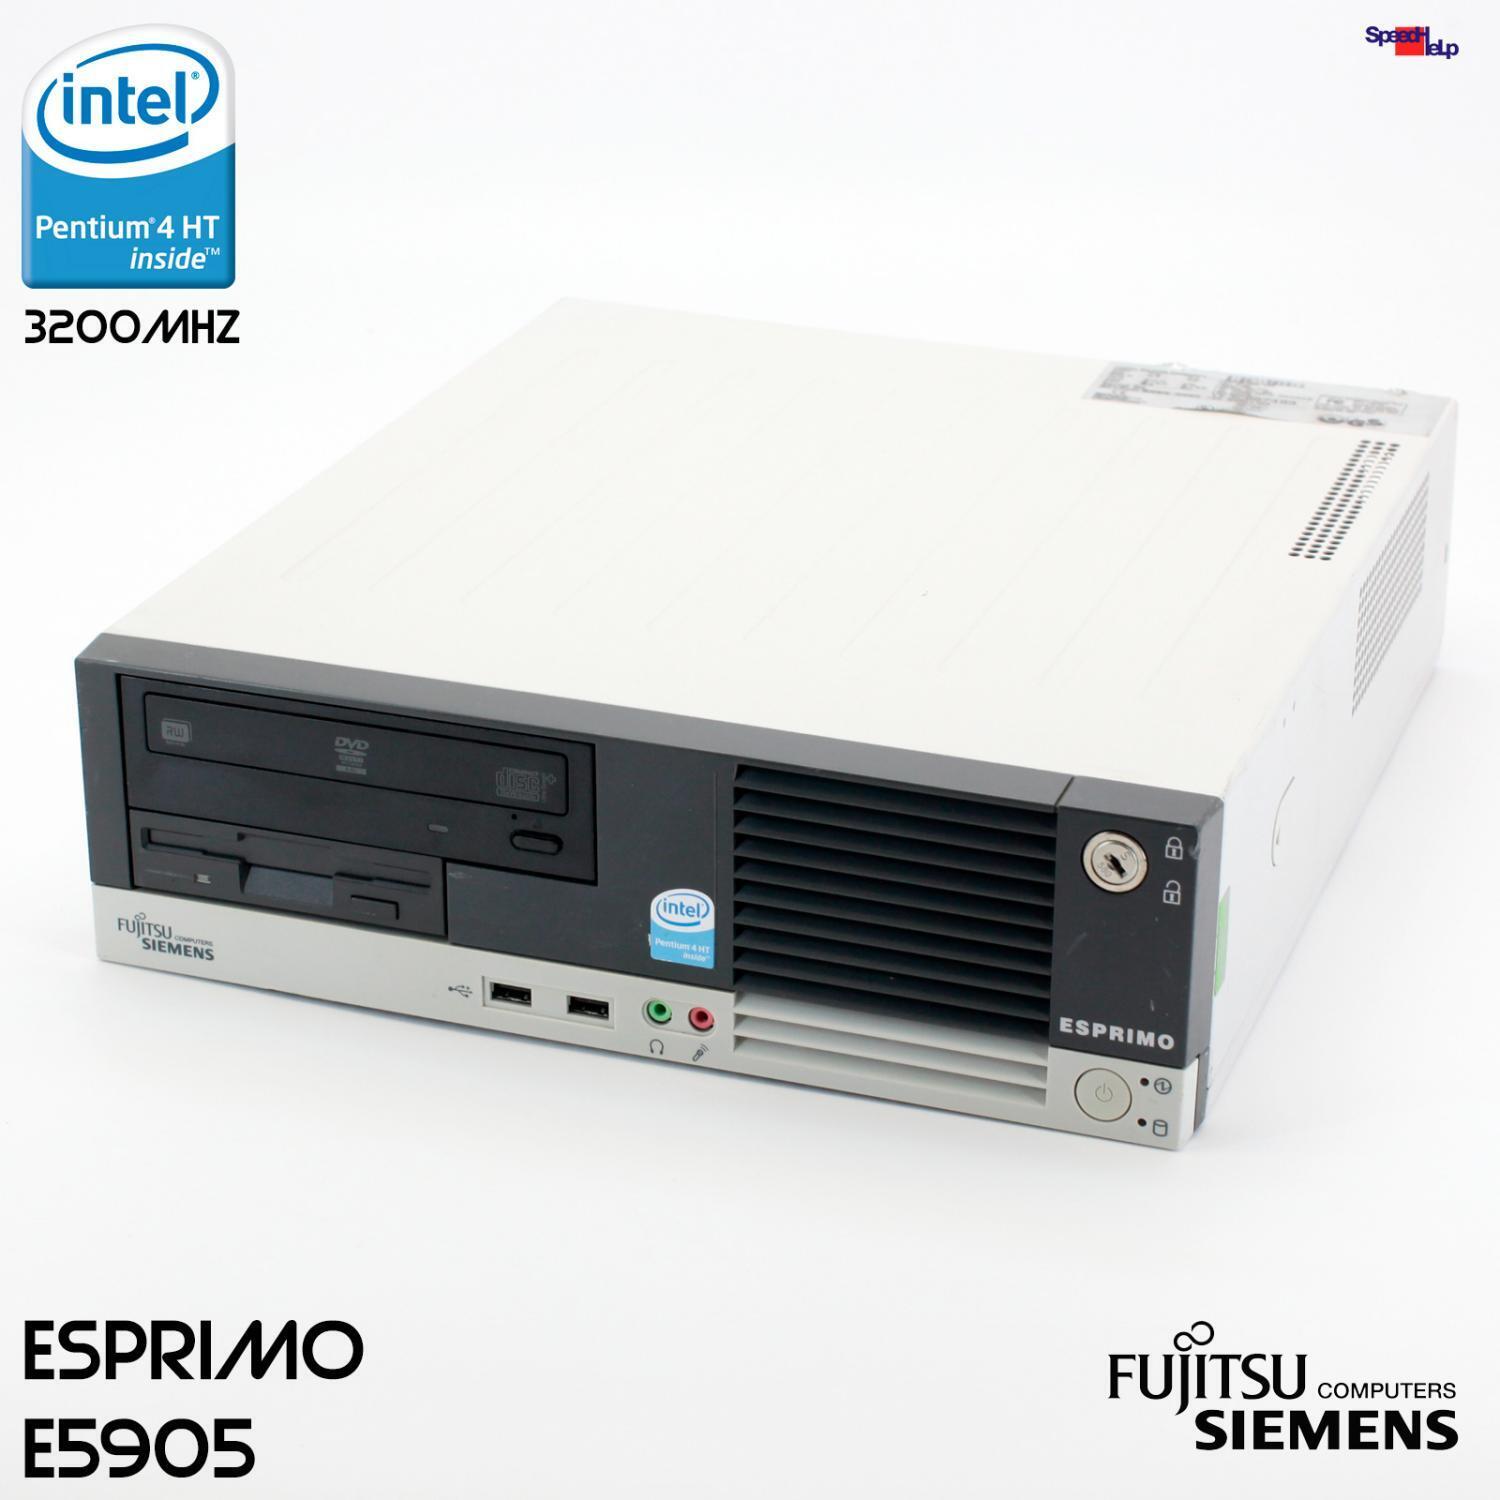 PC Computer FSC Fujitsu Siemens Esprimo E5905 D2164-A11 GS5 Intel Pentium 4